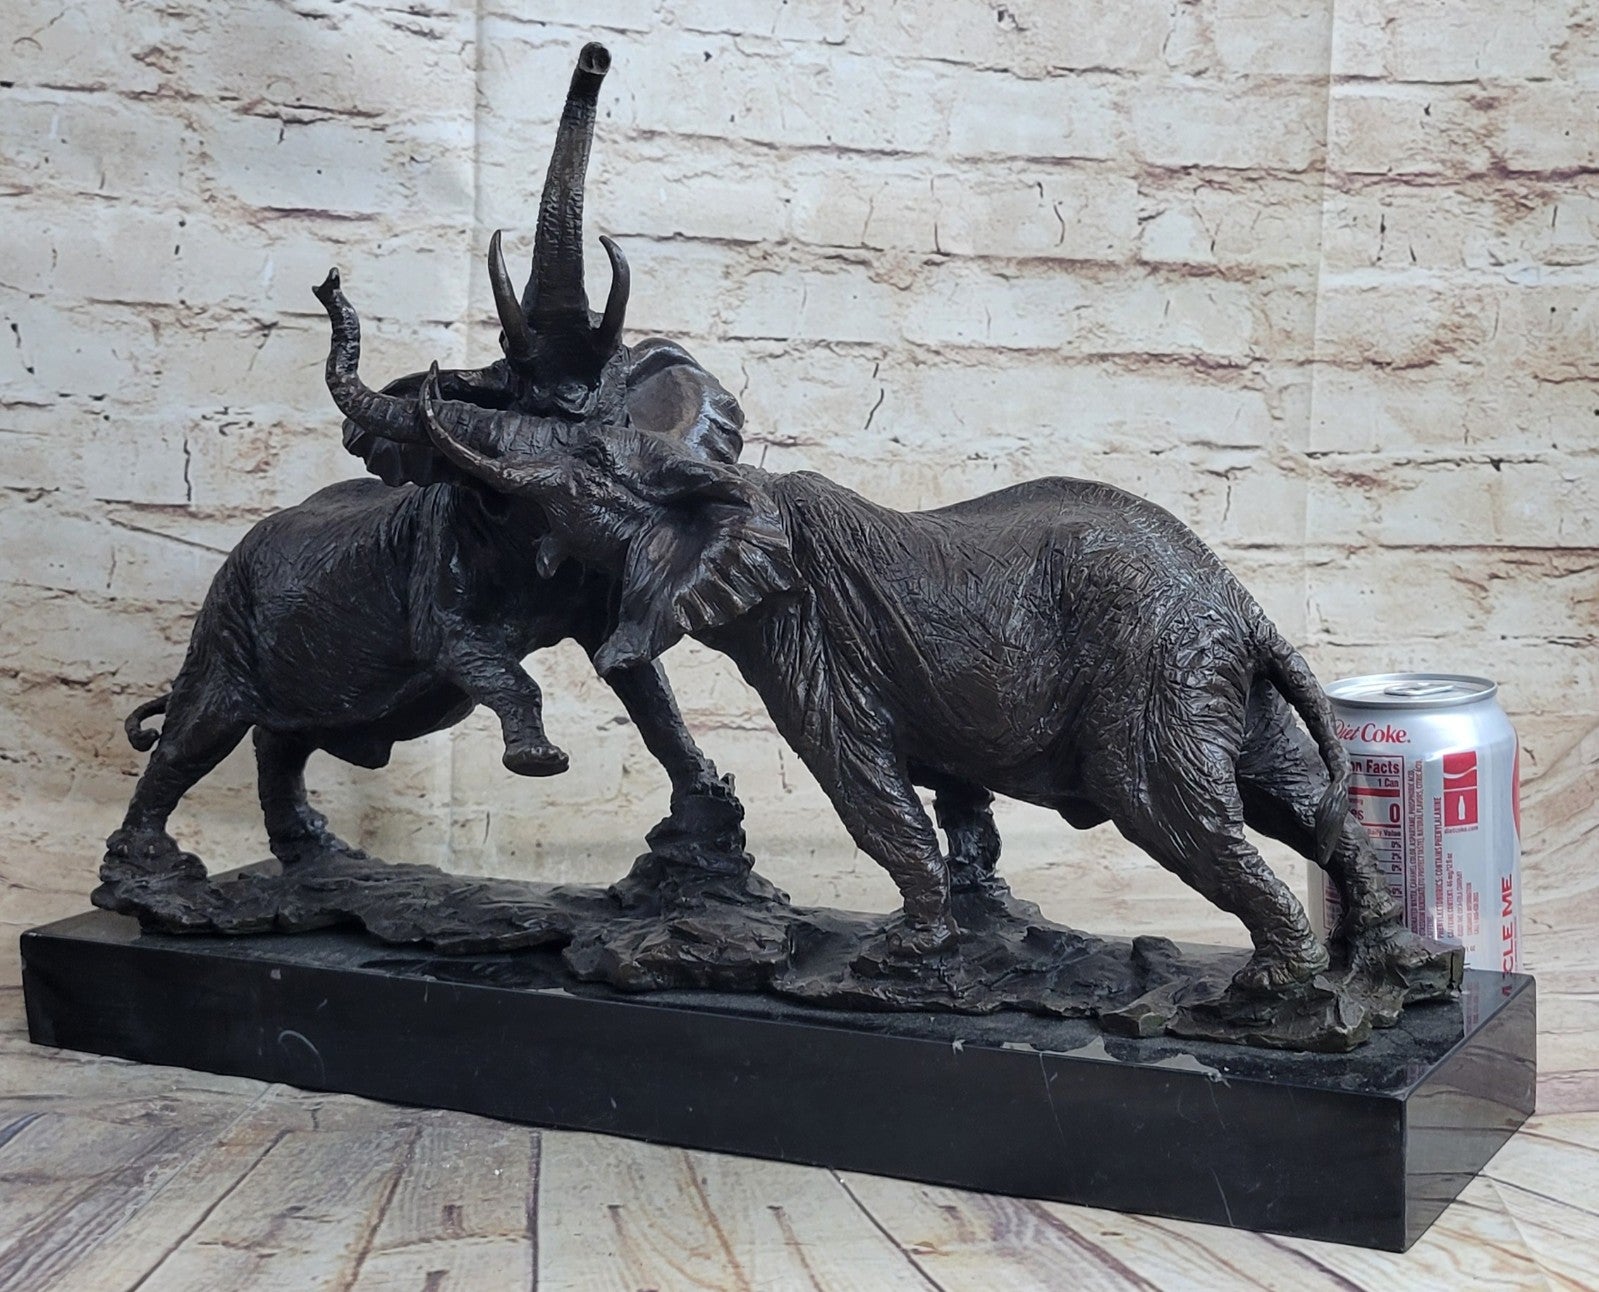 Elephants in Battle Bronze Sculpture Hot Cast Marble Base Figurine Wild Life Art